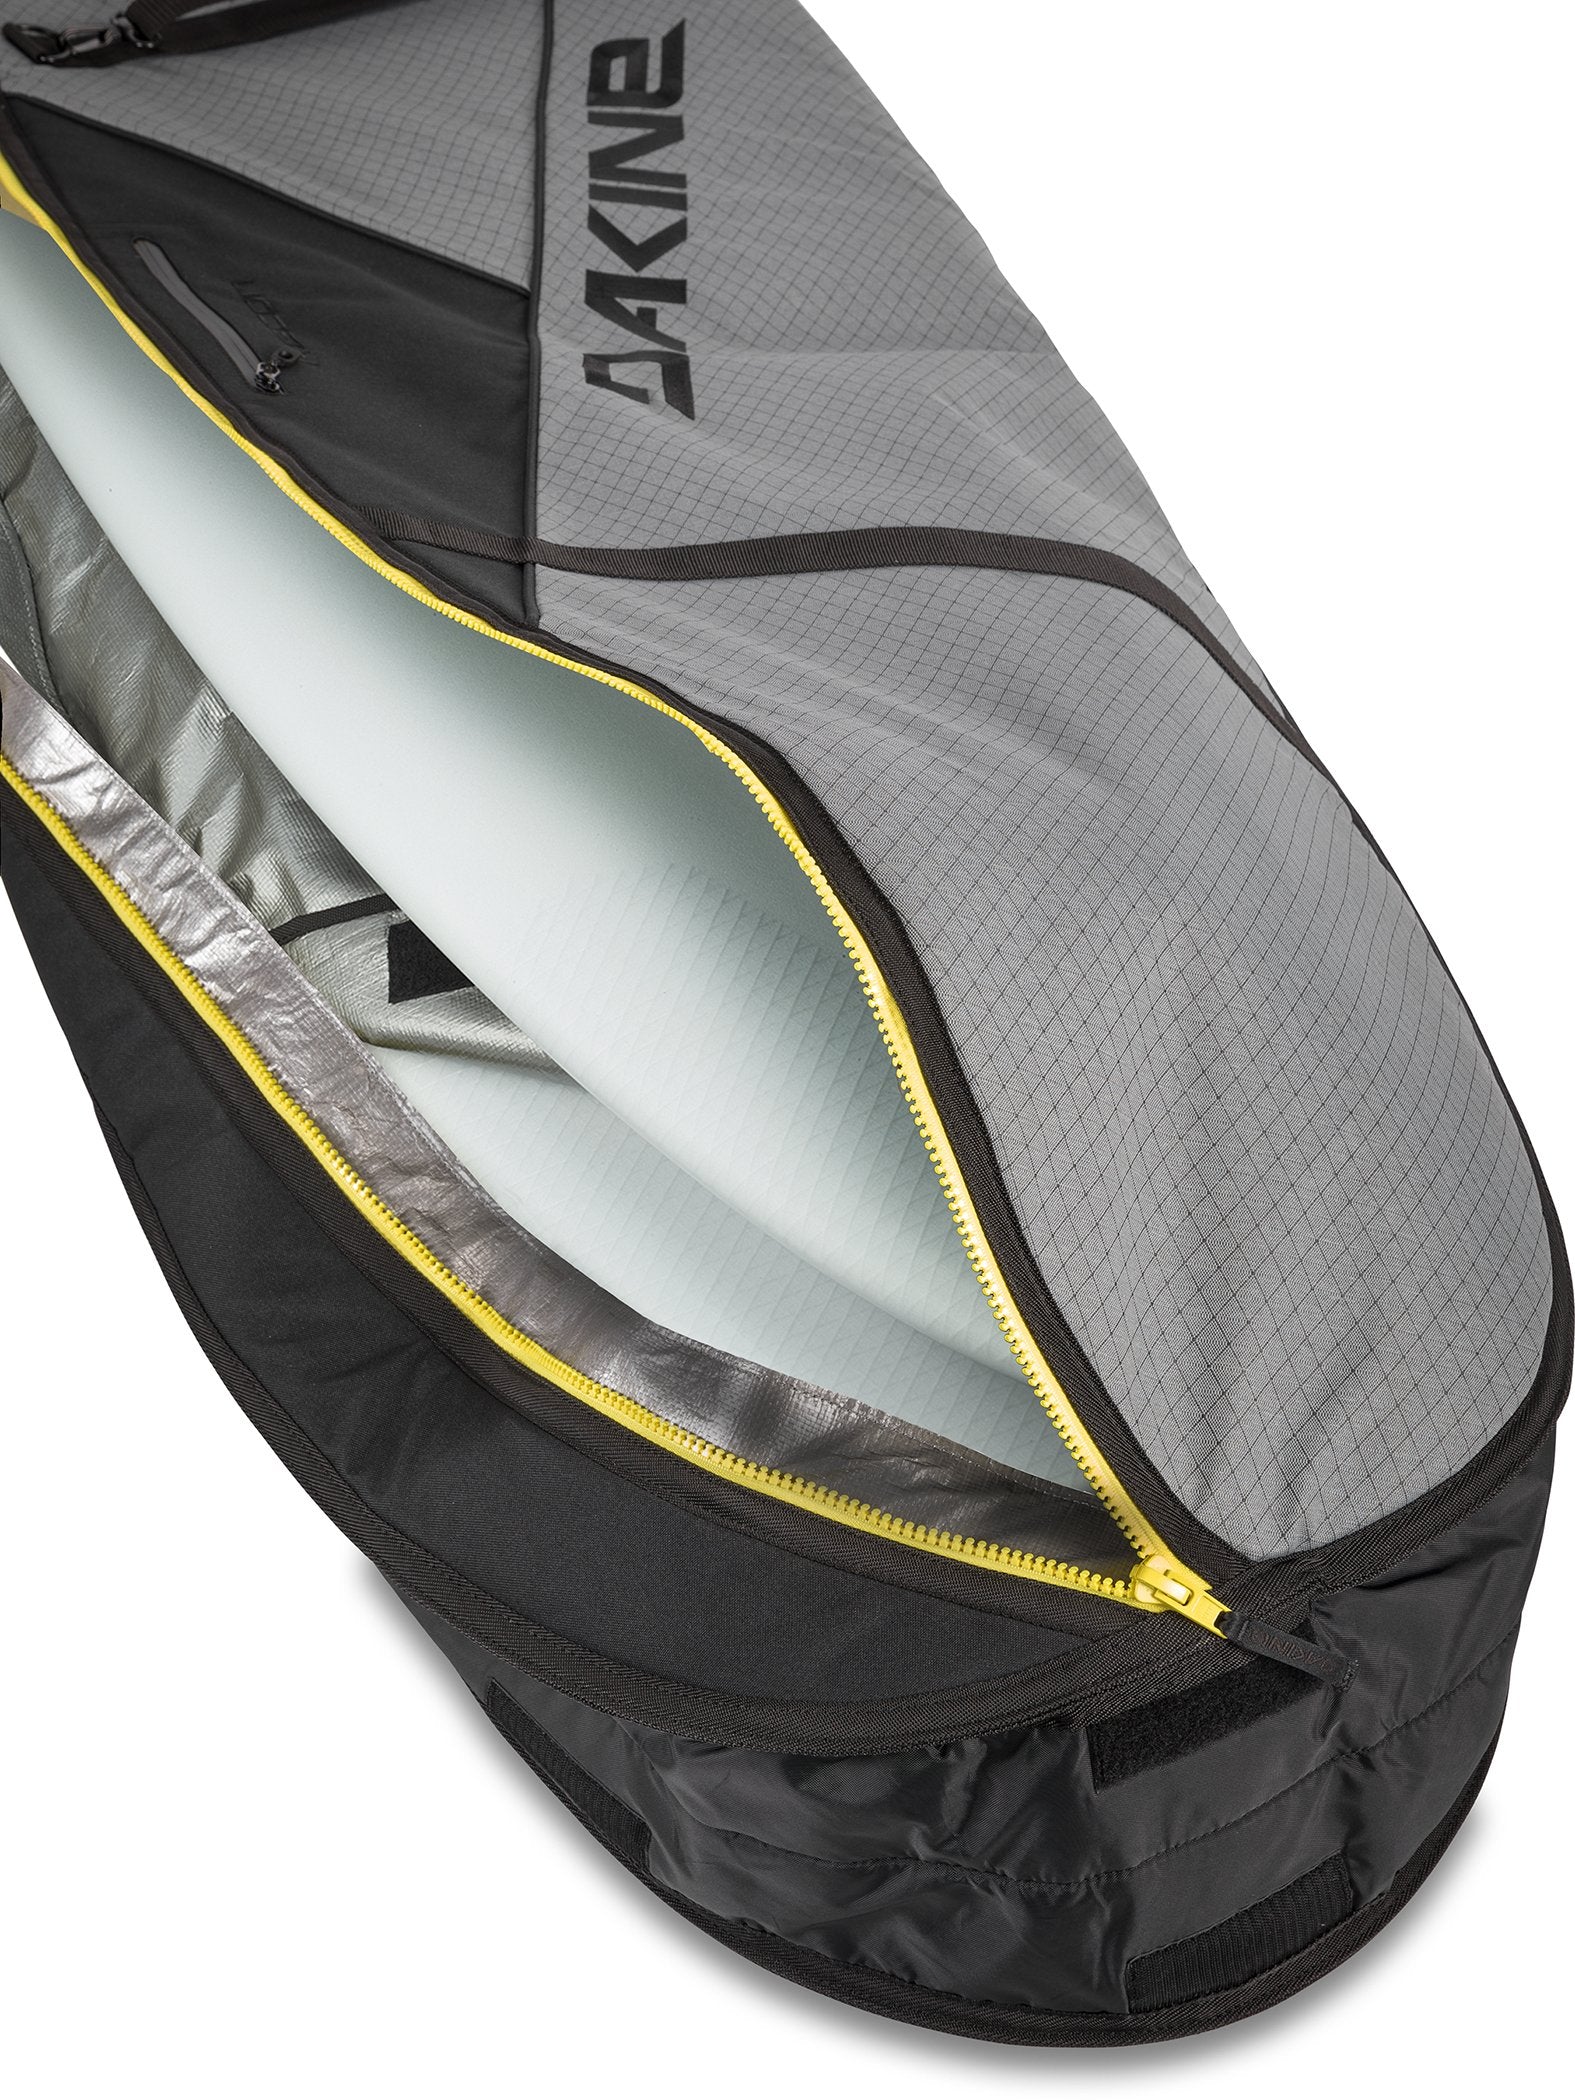 Dakine Recon 6ft 3 Double Thruster Surfboard Multi Travel Board Bag Carbon - Boards360